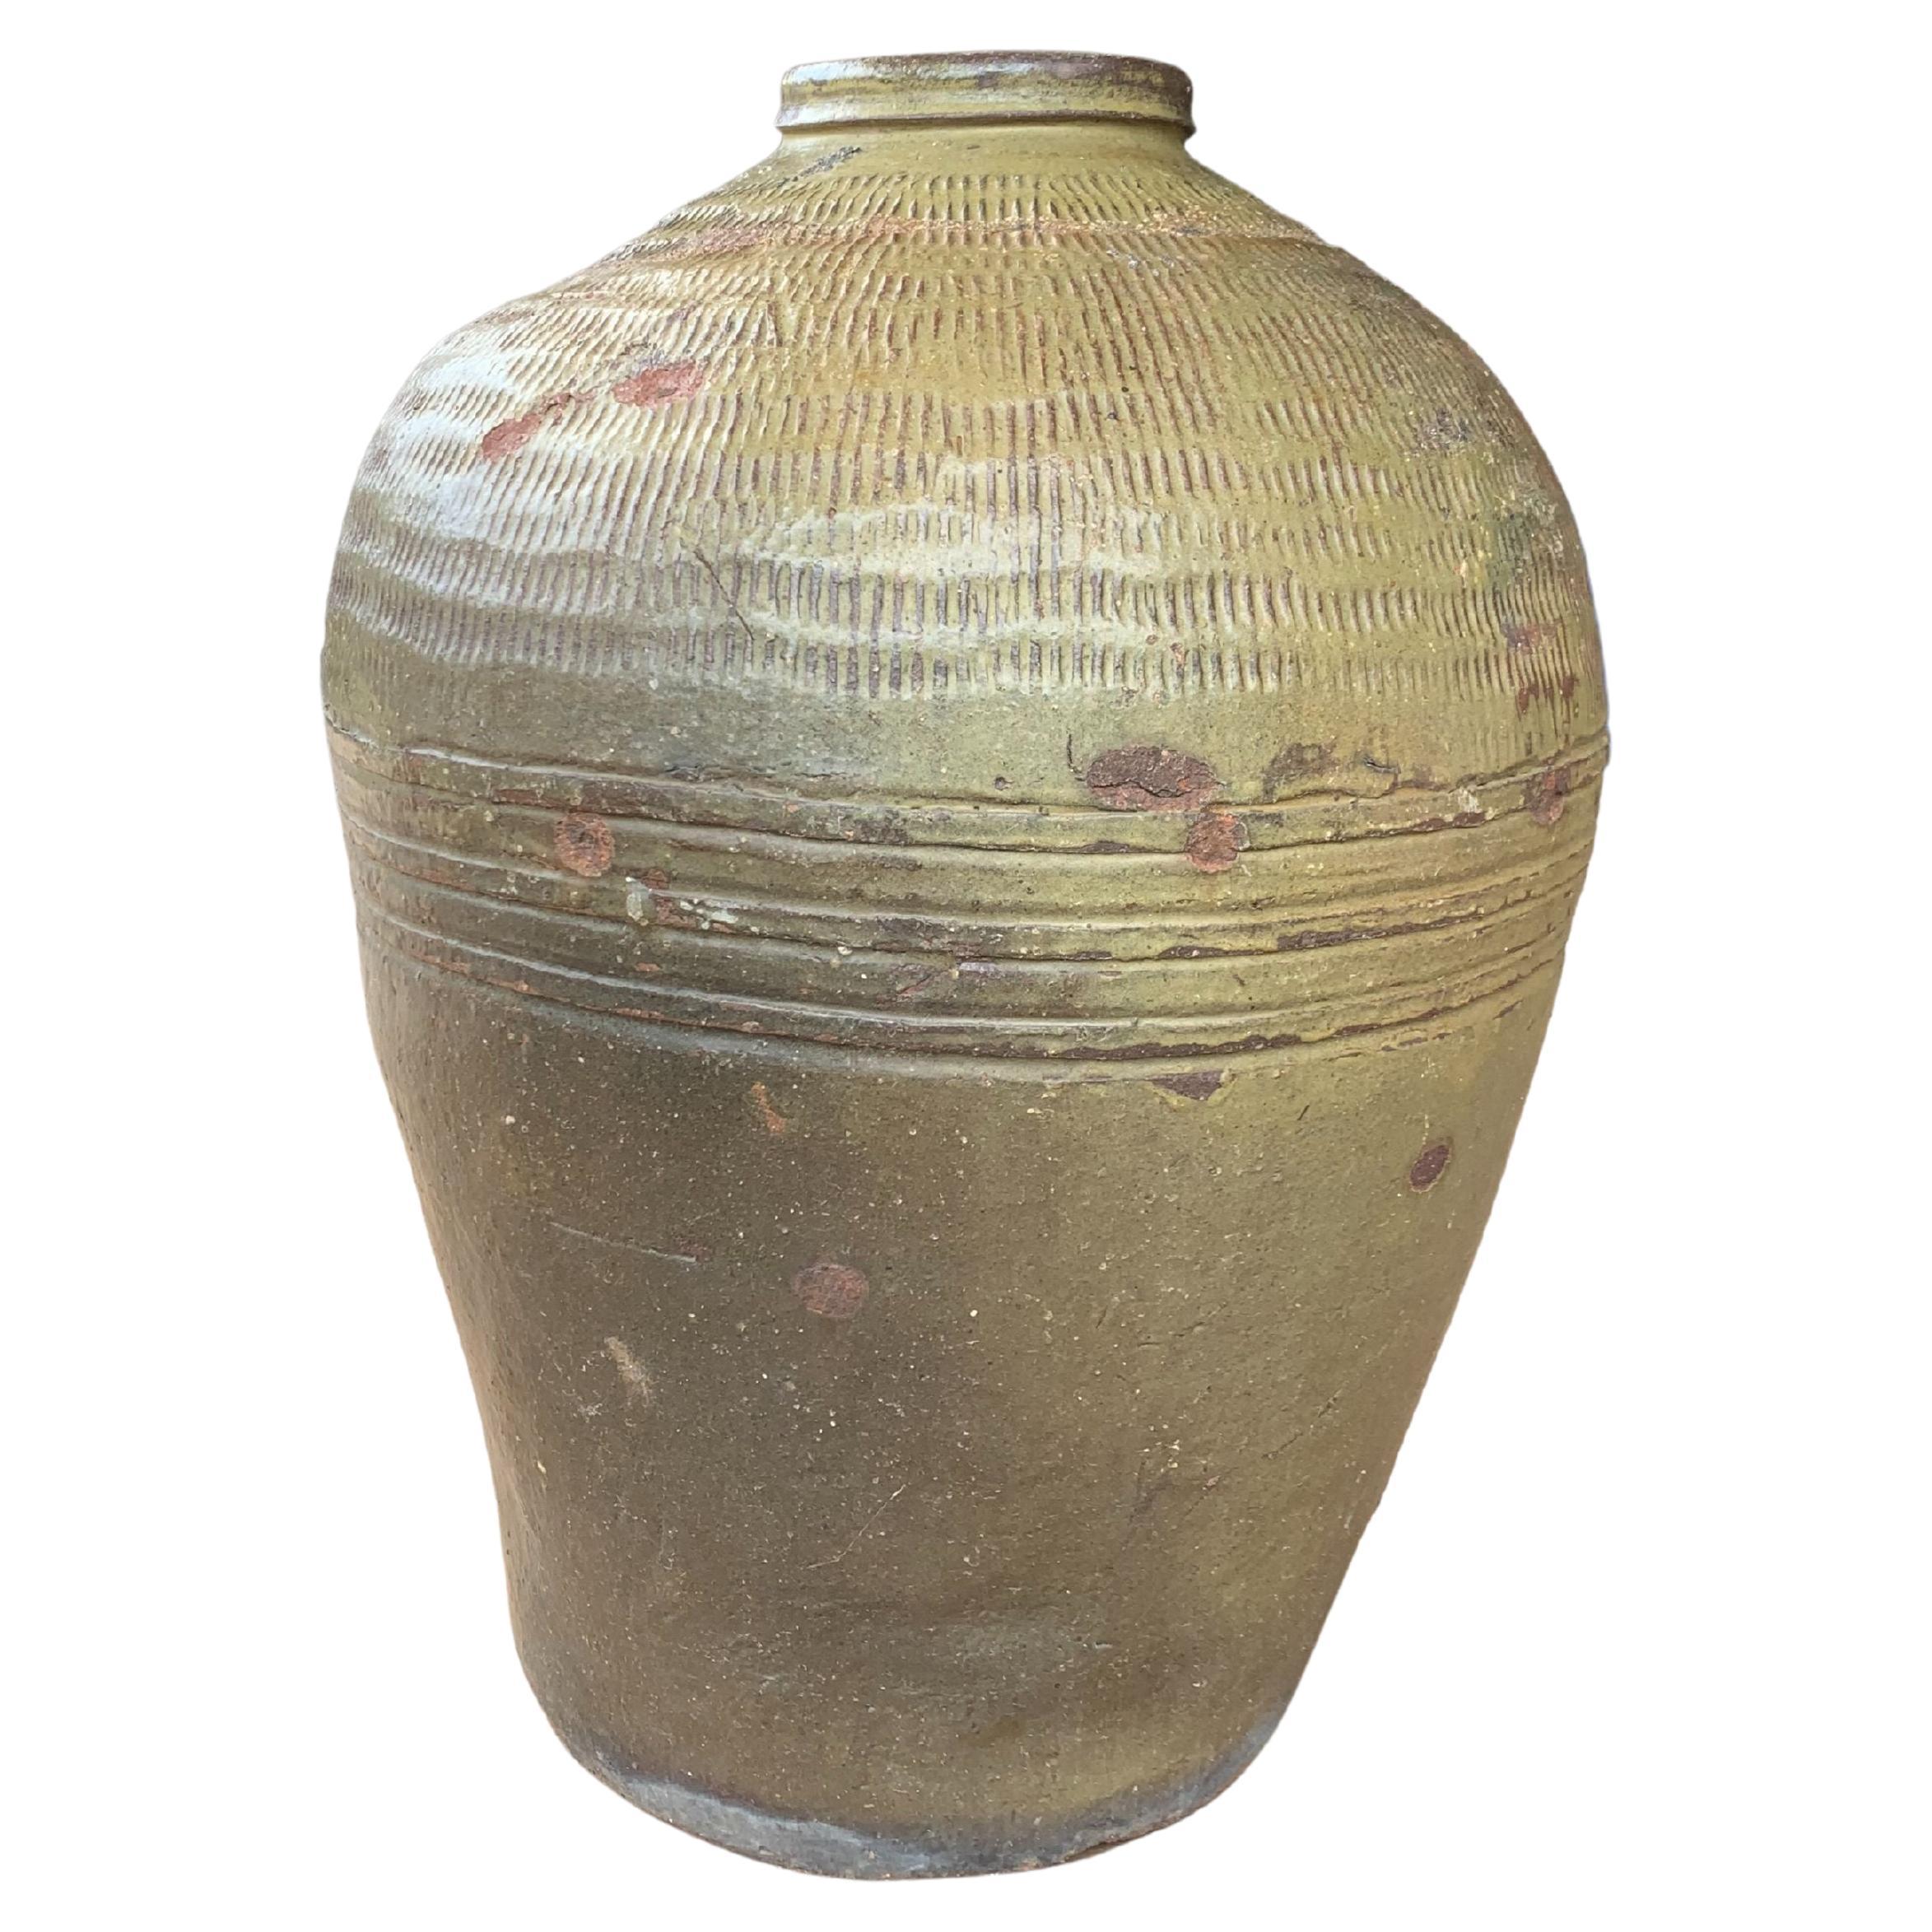 Antique Chinese Ceramic Pickling Jar Jade Green, c. 1900